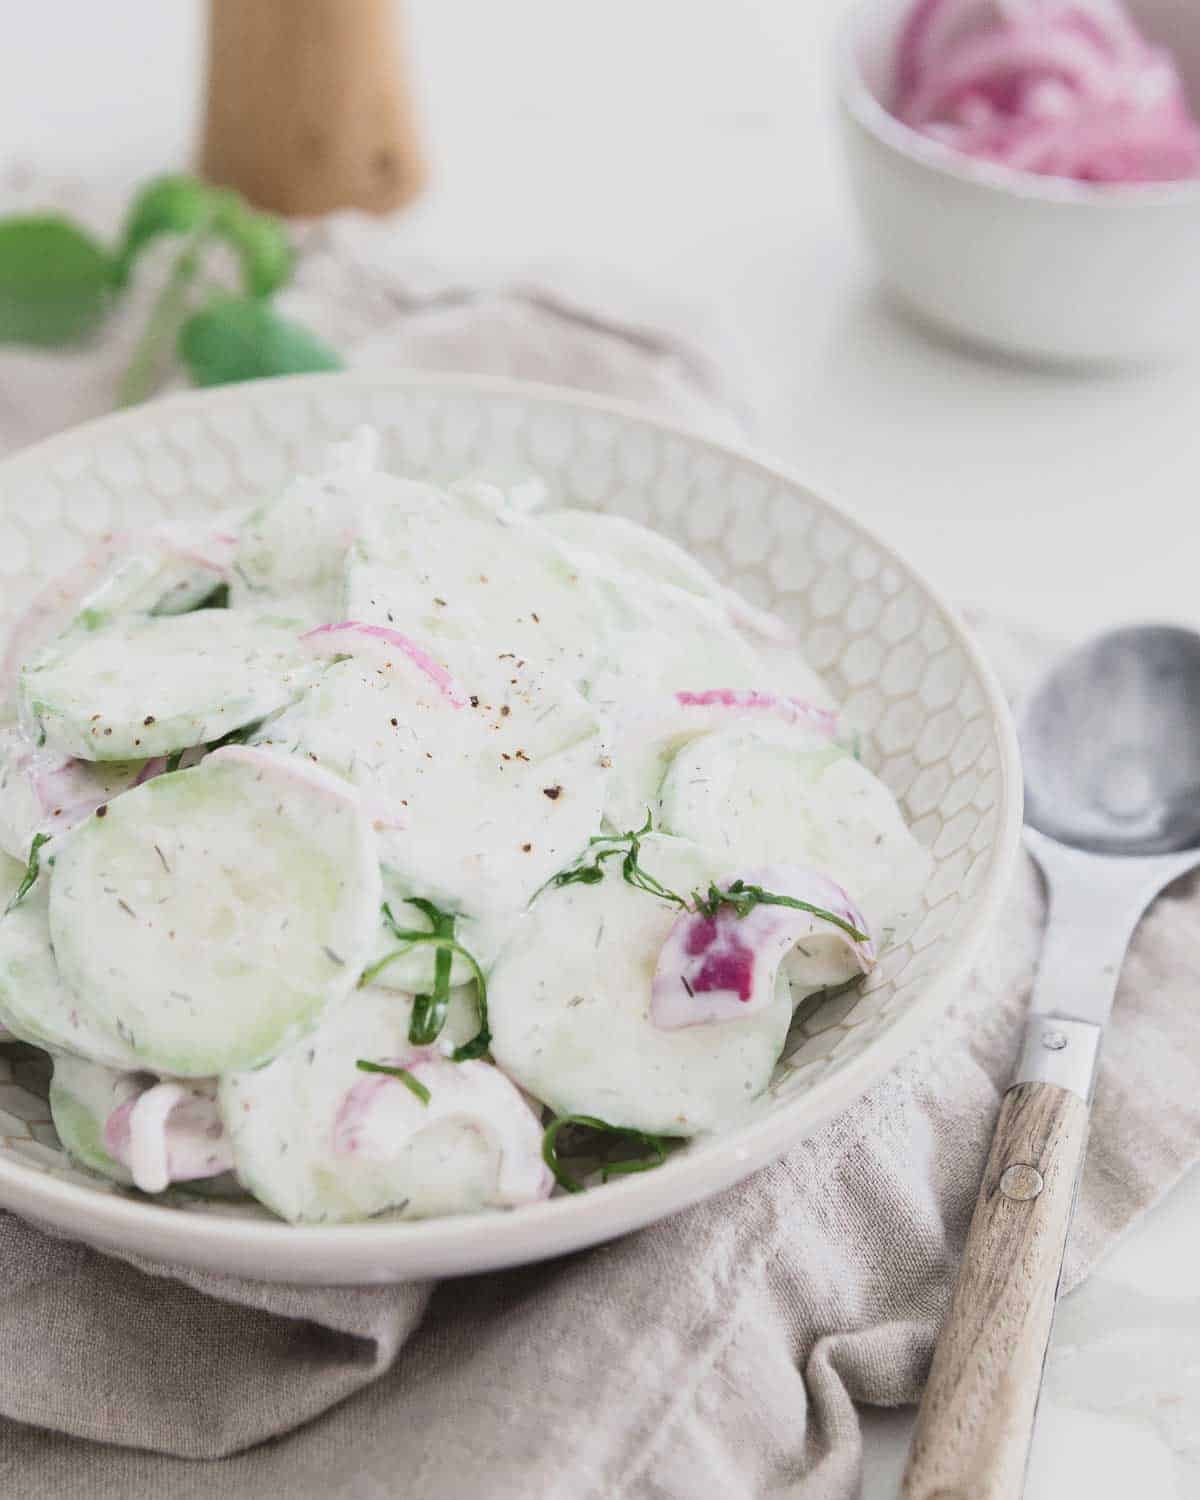 Creamy Cucumber Salad Recipe With Mayo